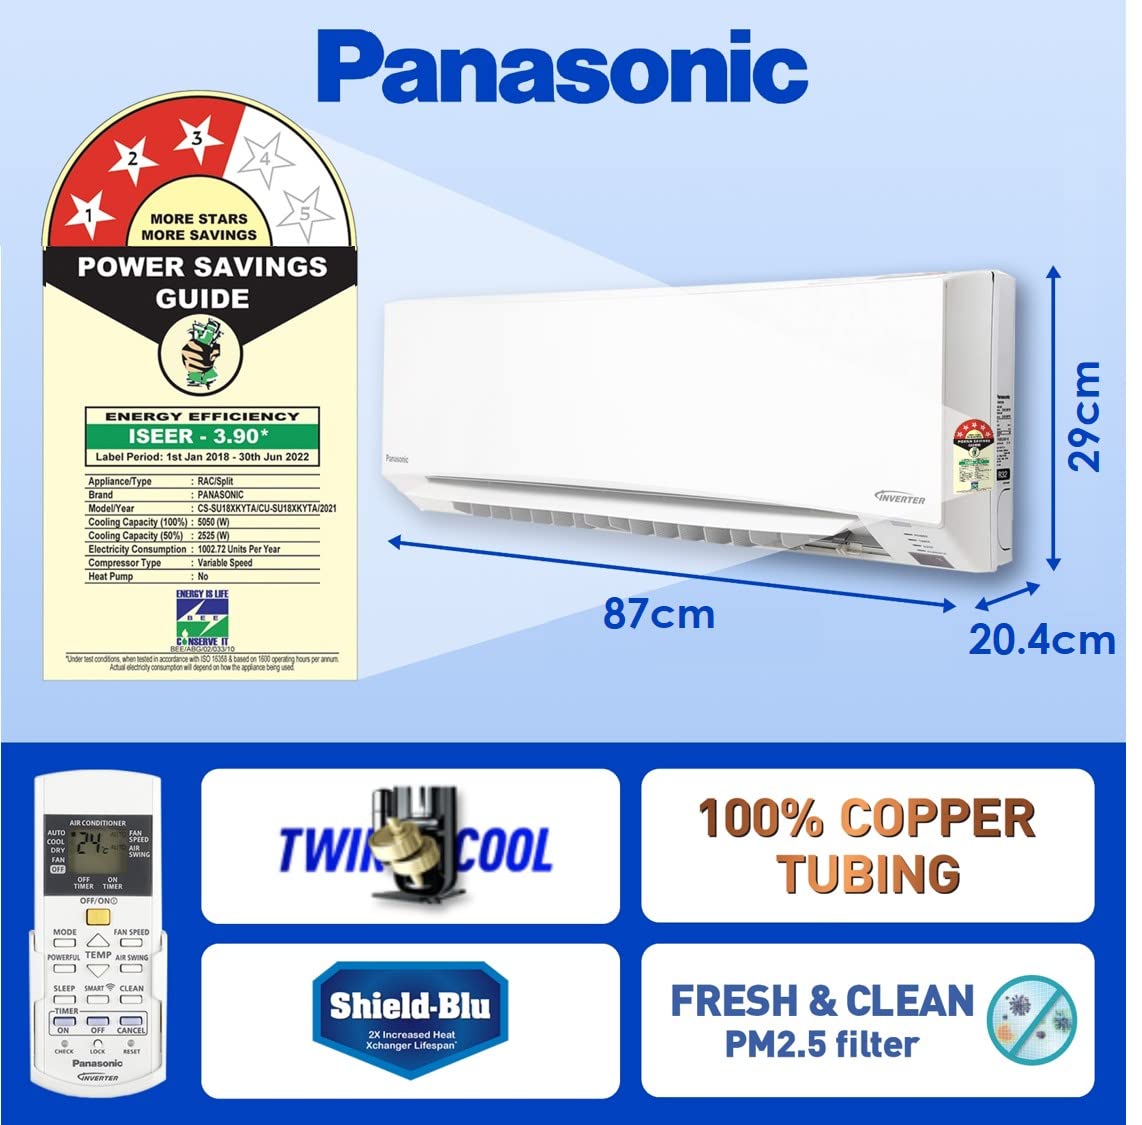 Panasonic 1.5 Ton 3 Star Wi-Fi Twin-Cool Inverter Split Air Conditioner (Copper, Shield Blu Anti-Corrosion Technology, PM 2.5 Air Purification, 2022 Model, CS/CU-SU18XKYTA, White)